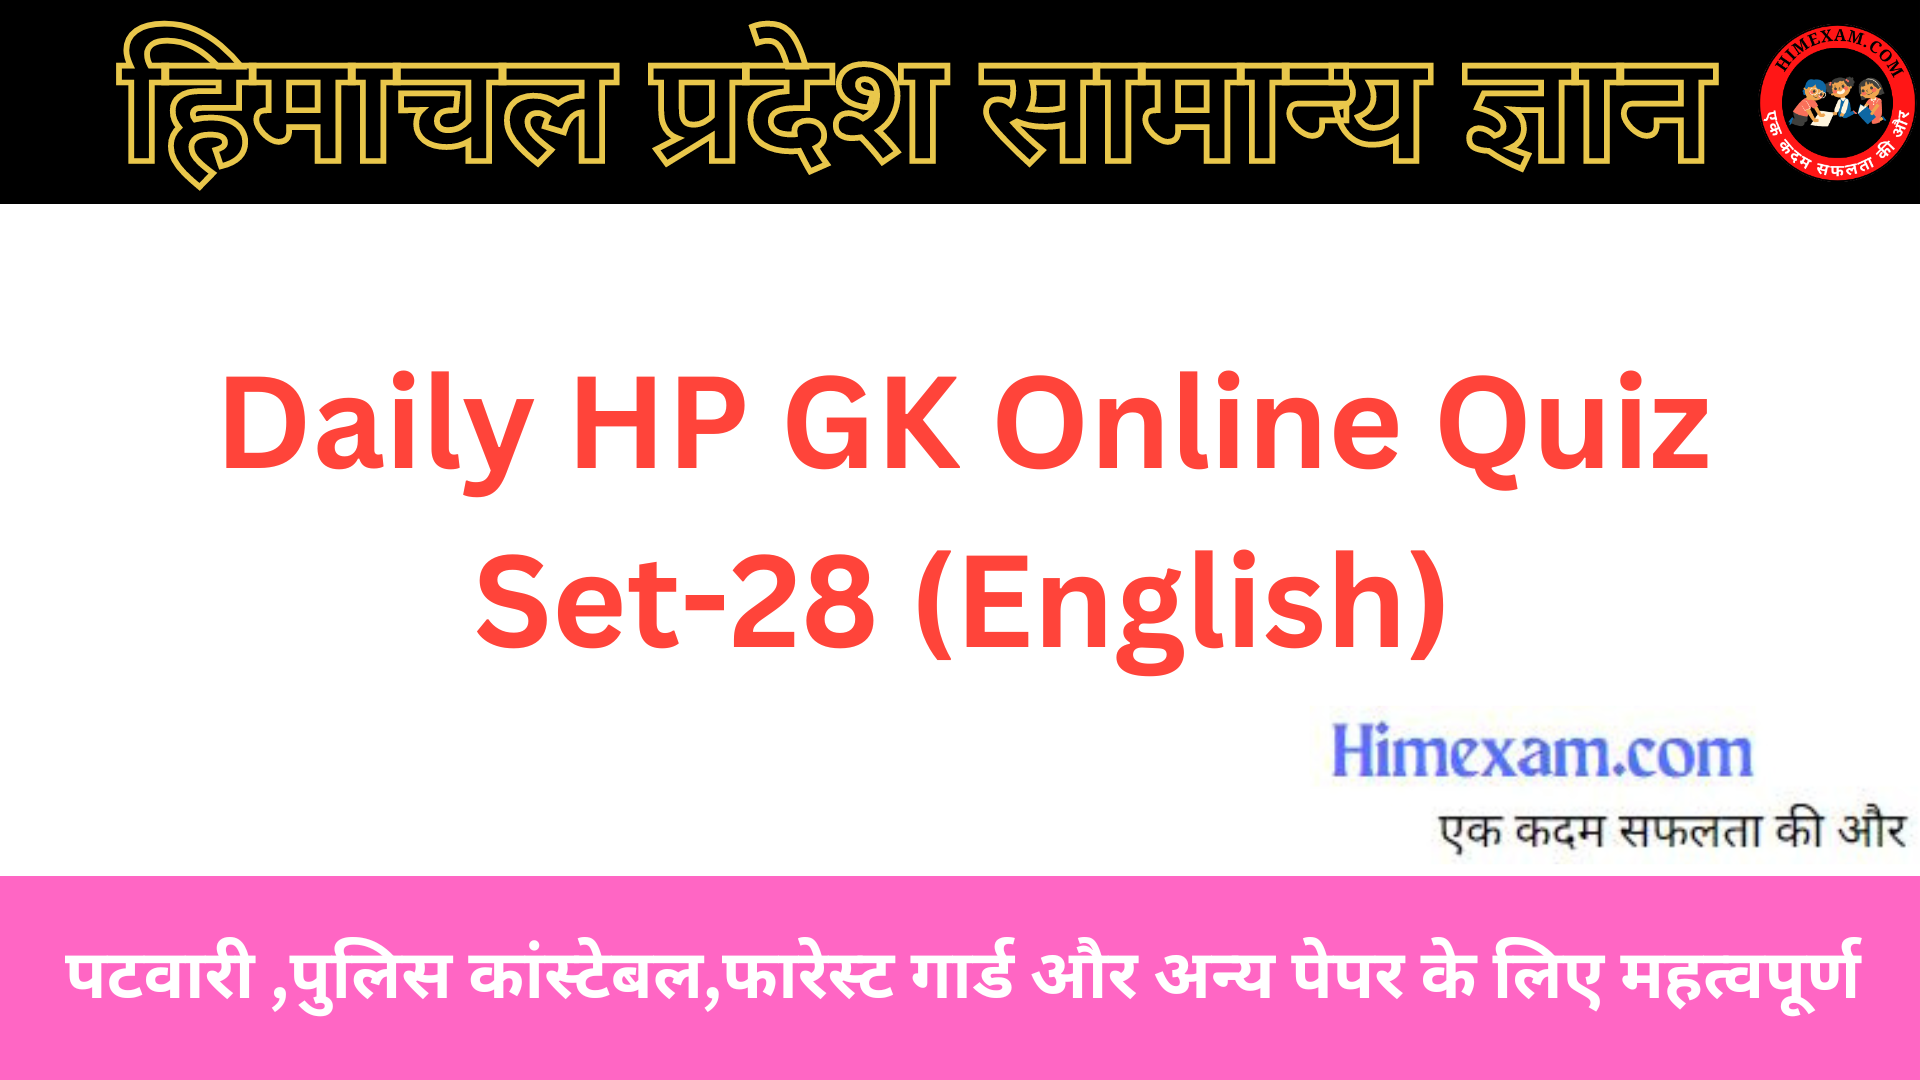 Daily HP GK Online Quiz Set-28 (English)